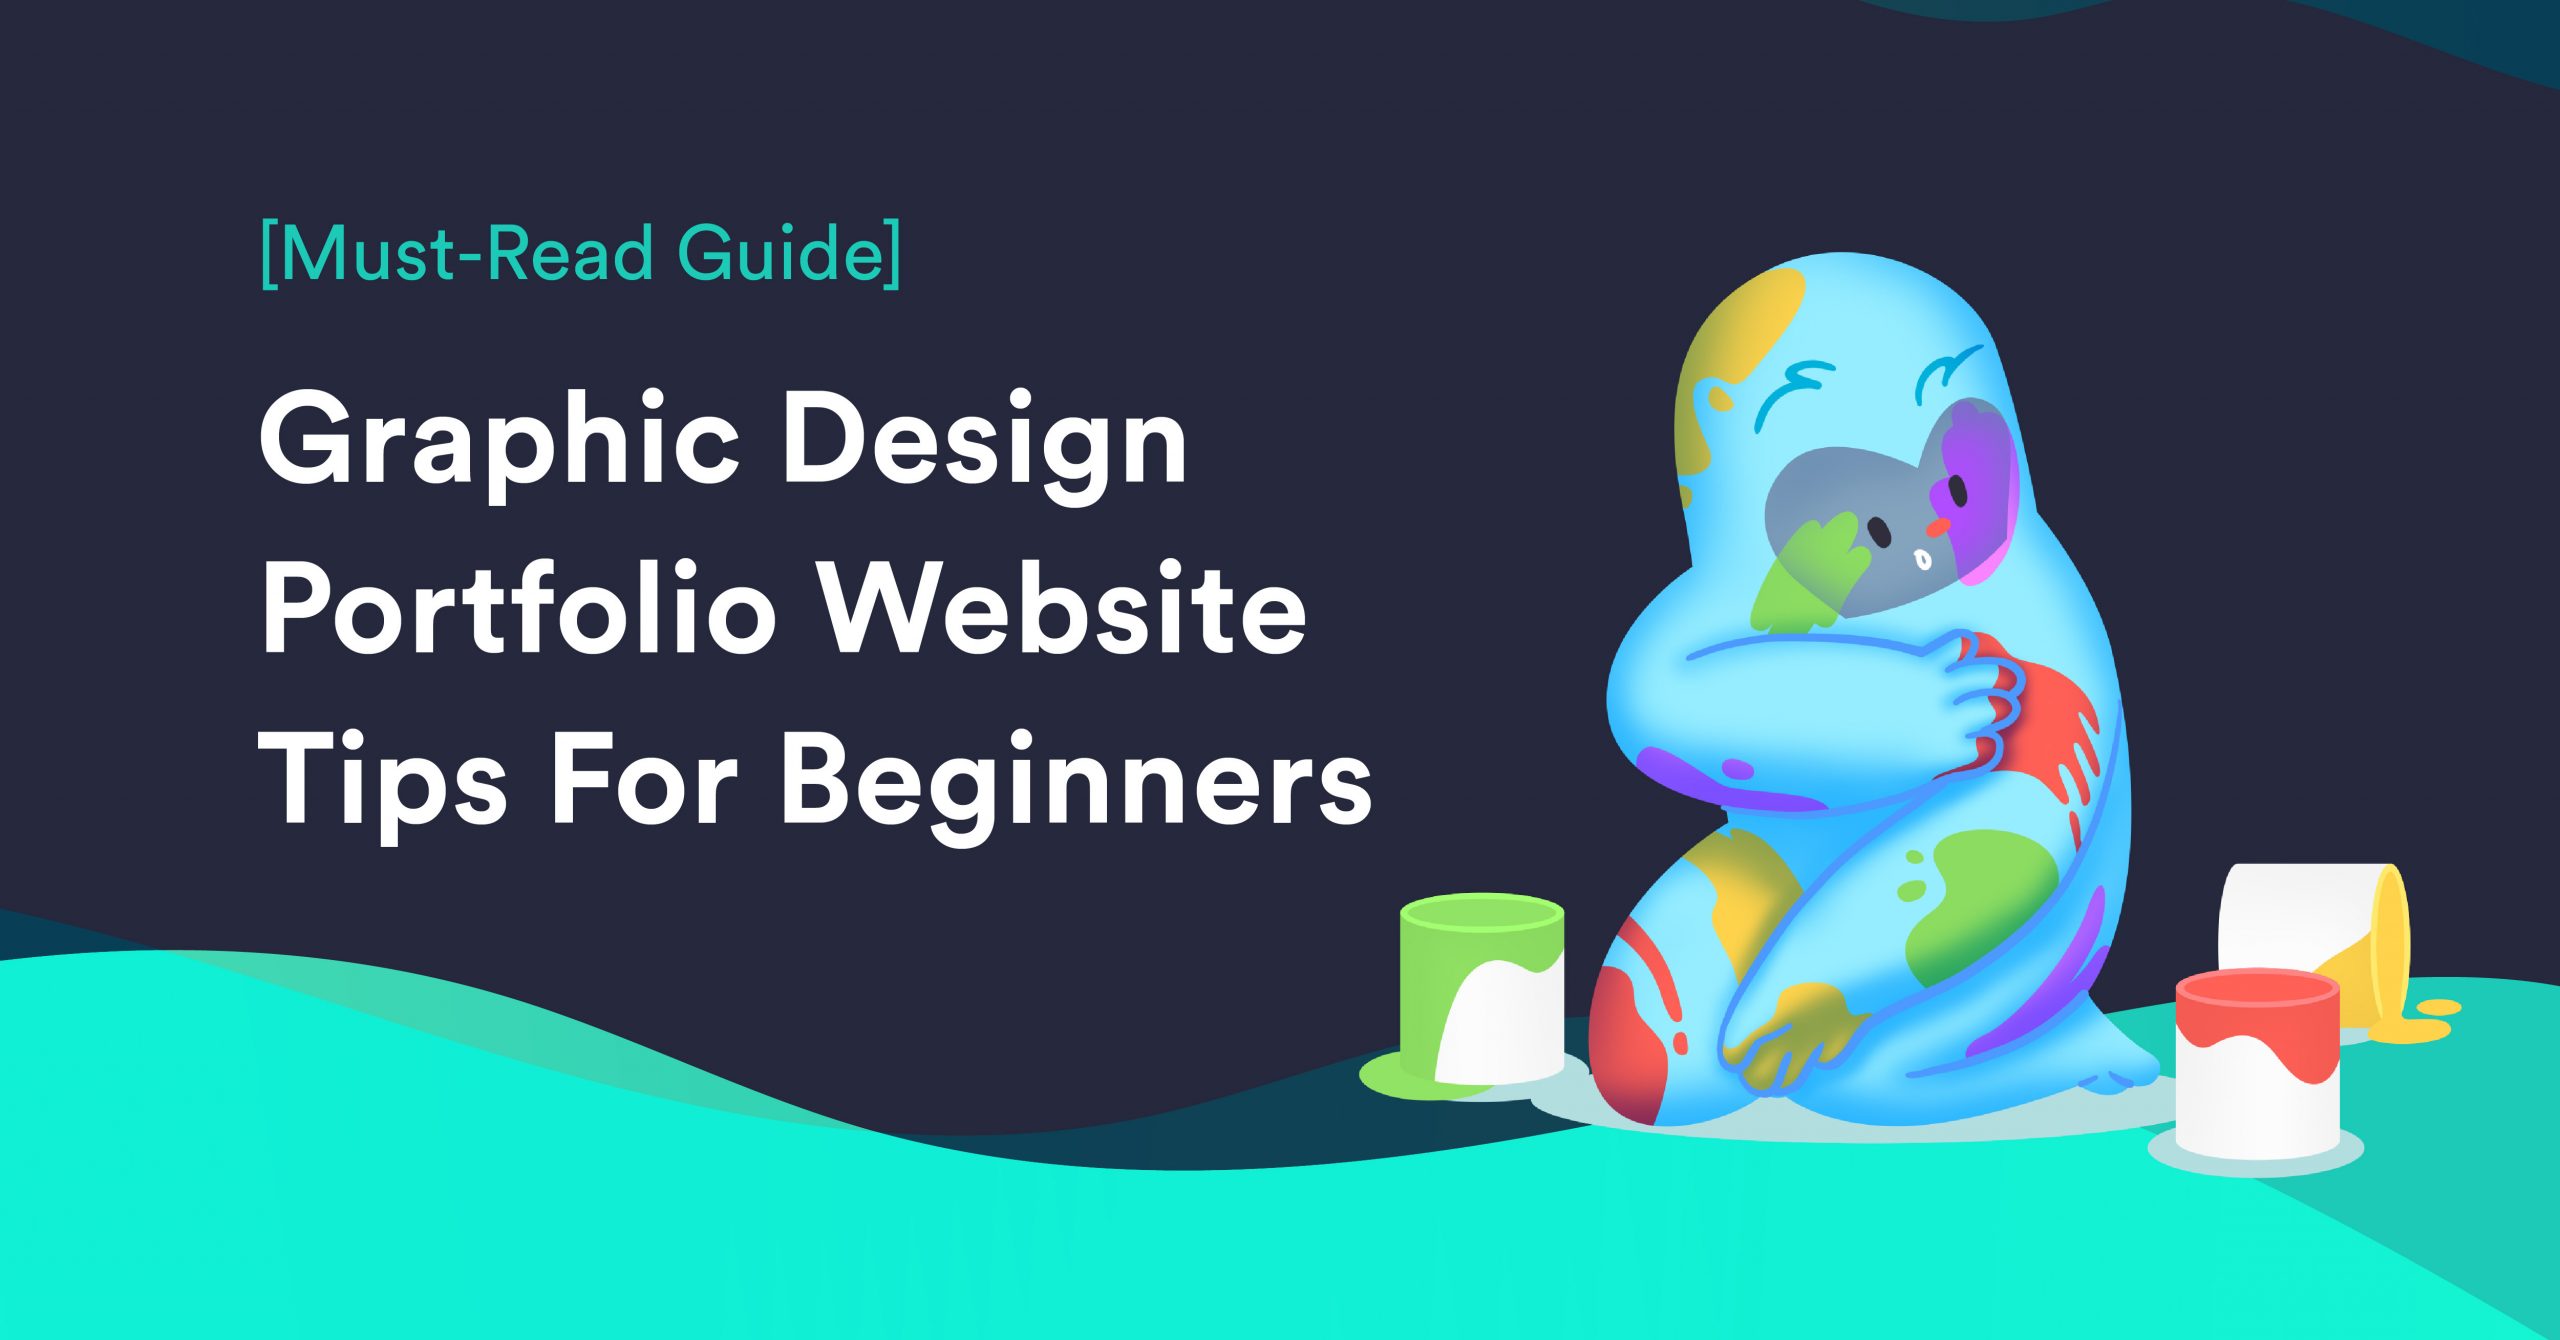 [Must-Read Guide] Graphic Design Portfolio Website Tips